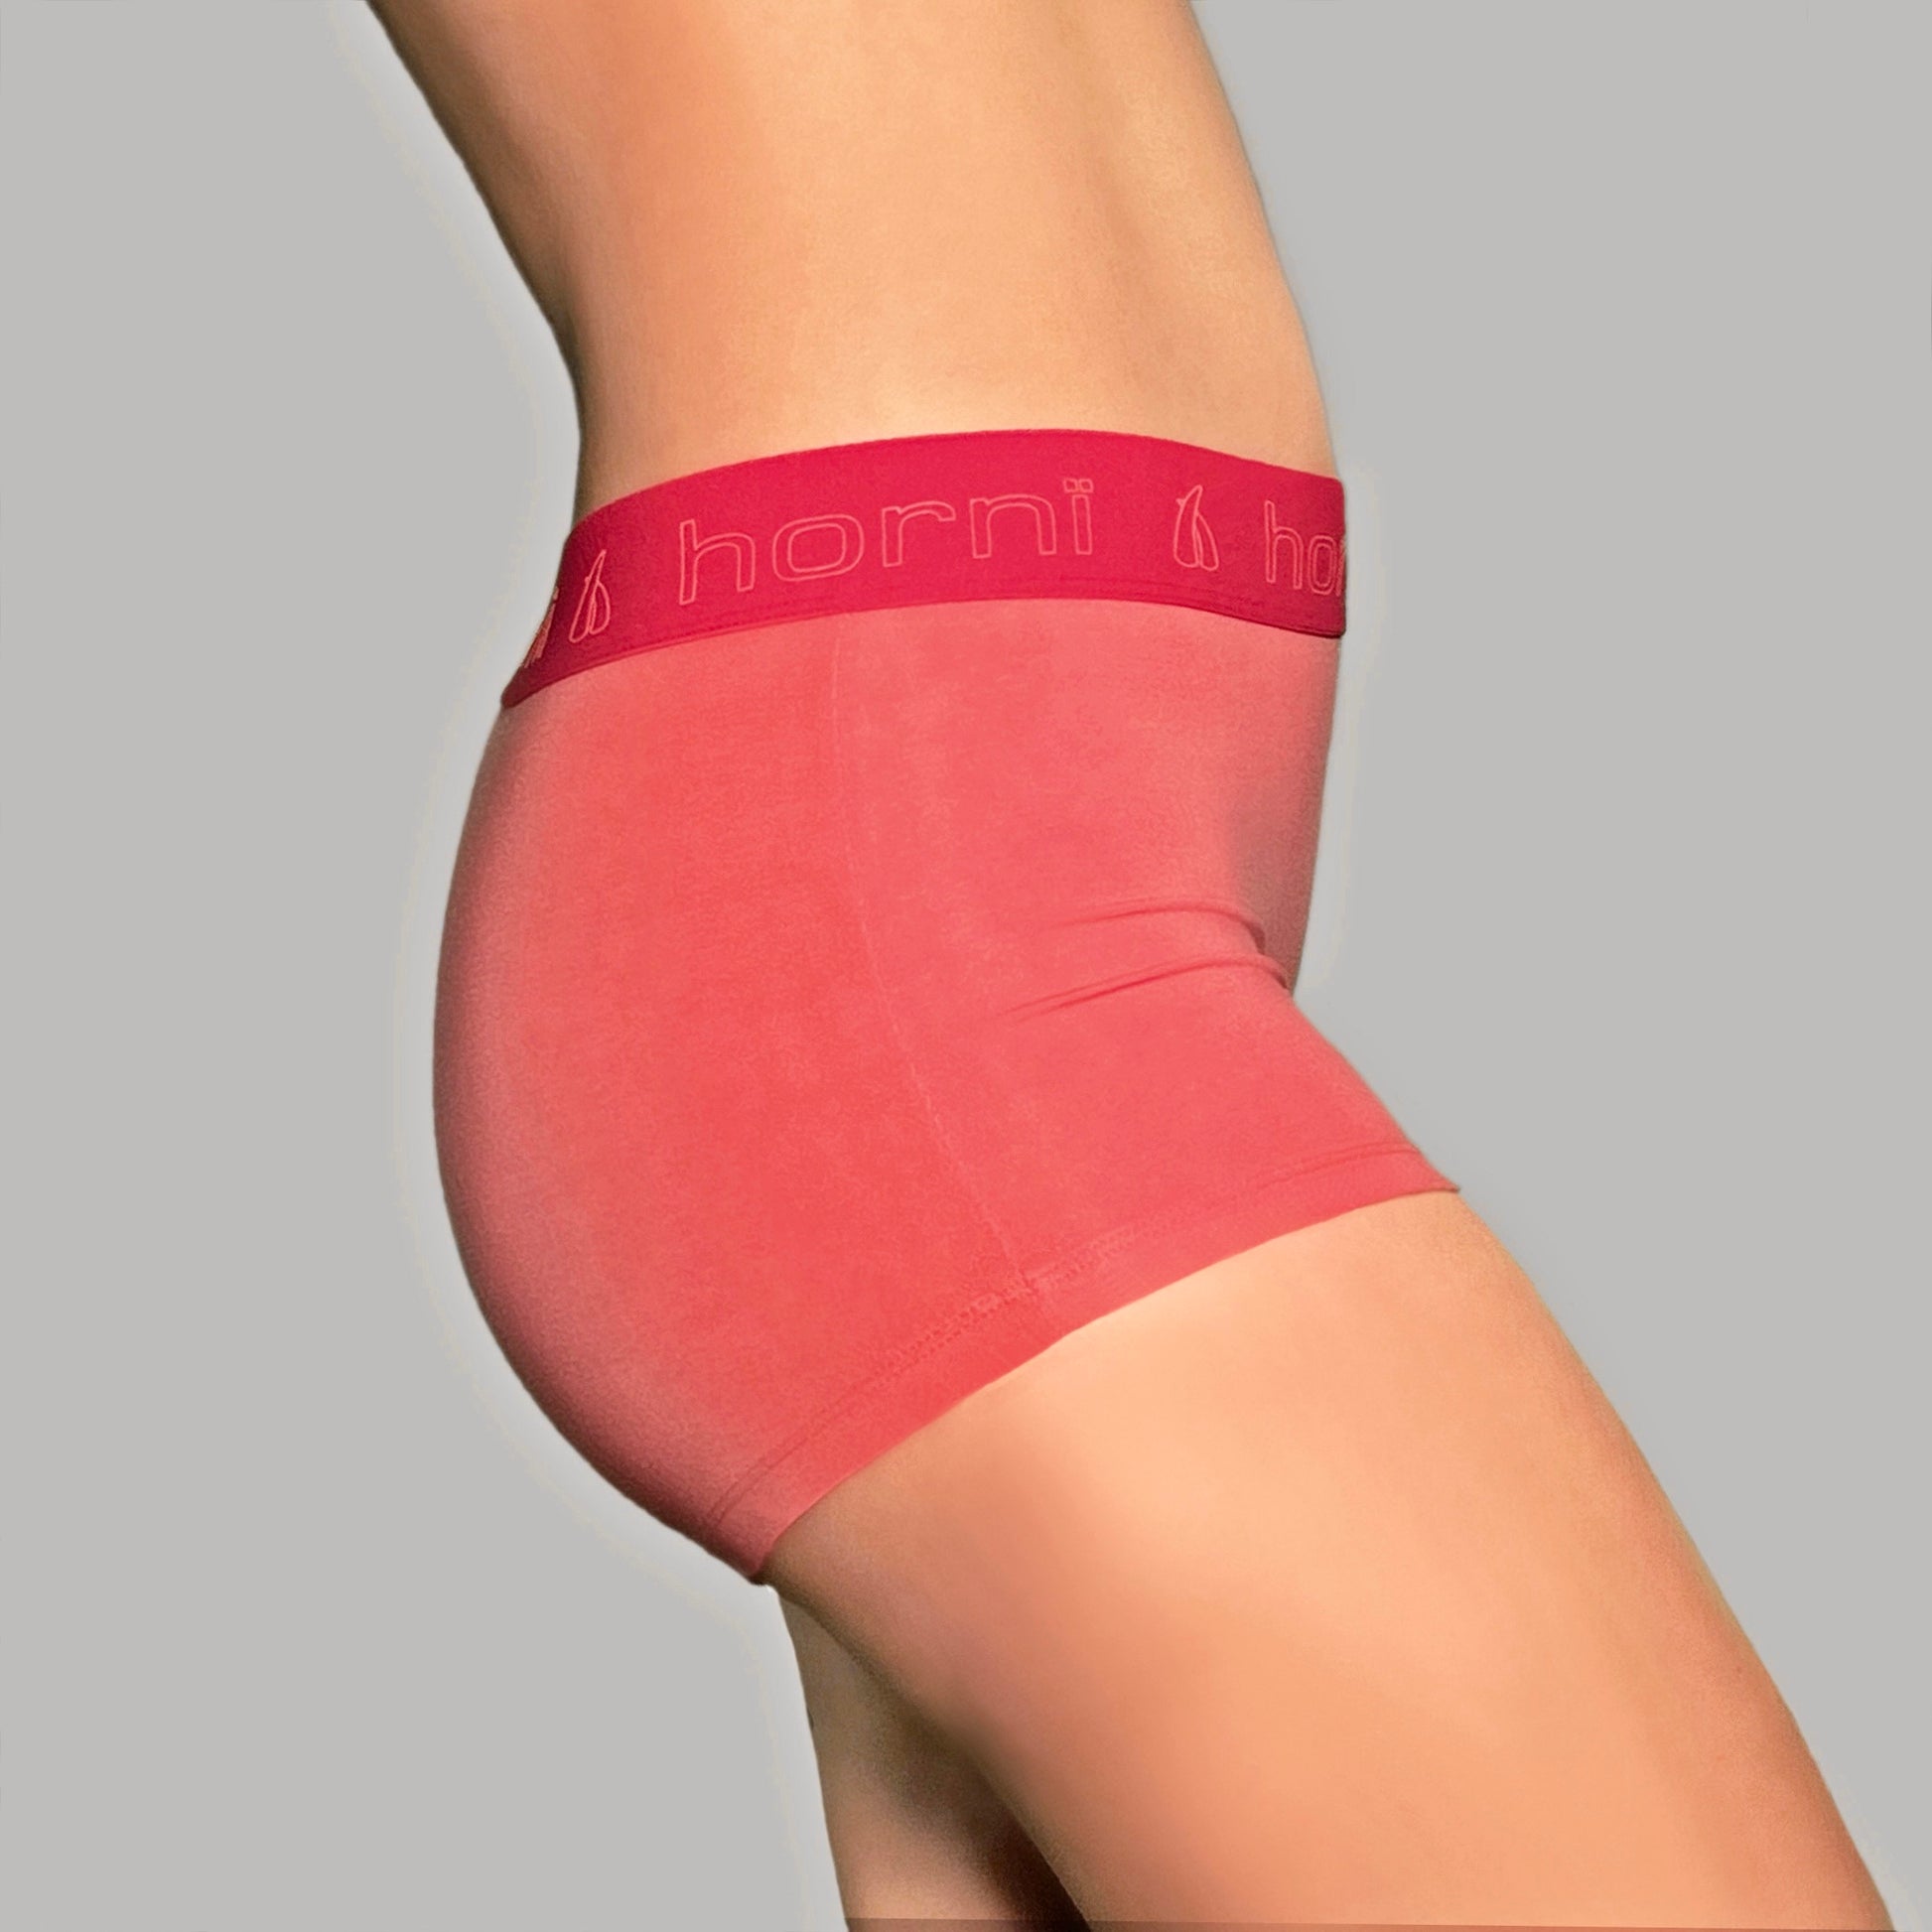 horni flamingo pink boxer shorts women's – hornï underwear